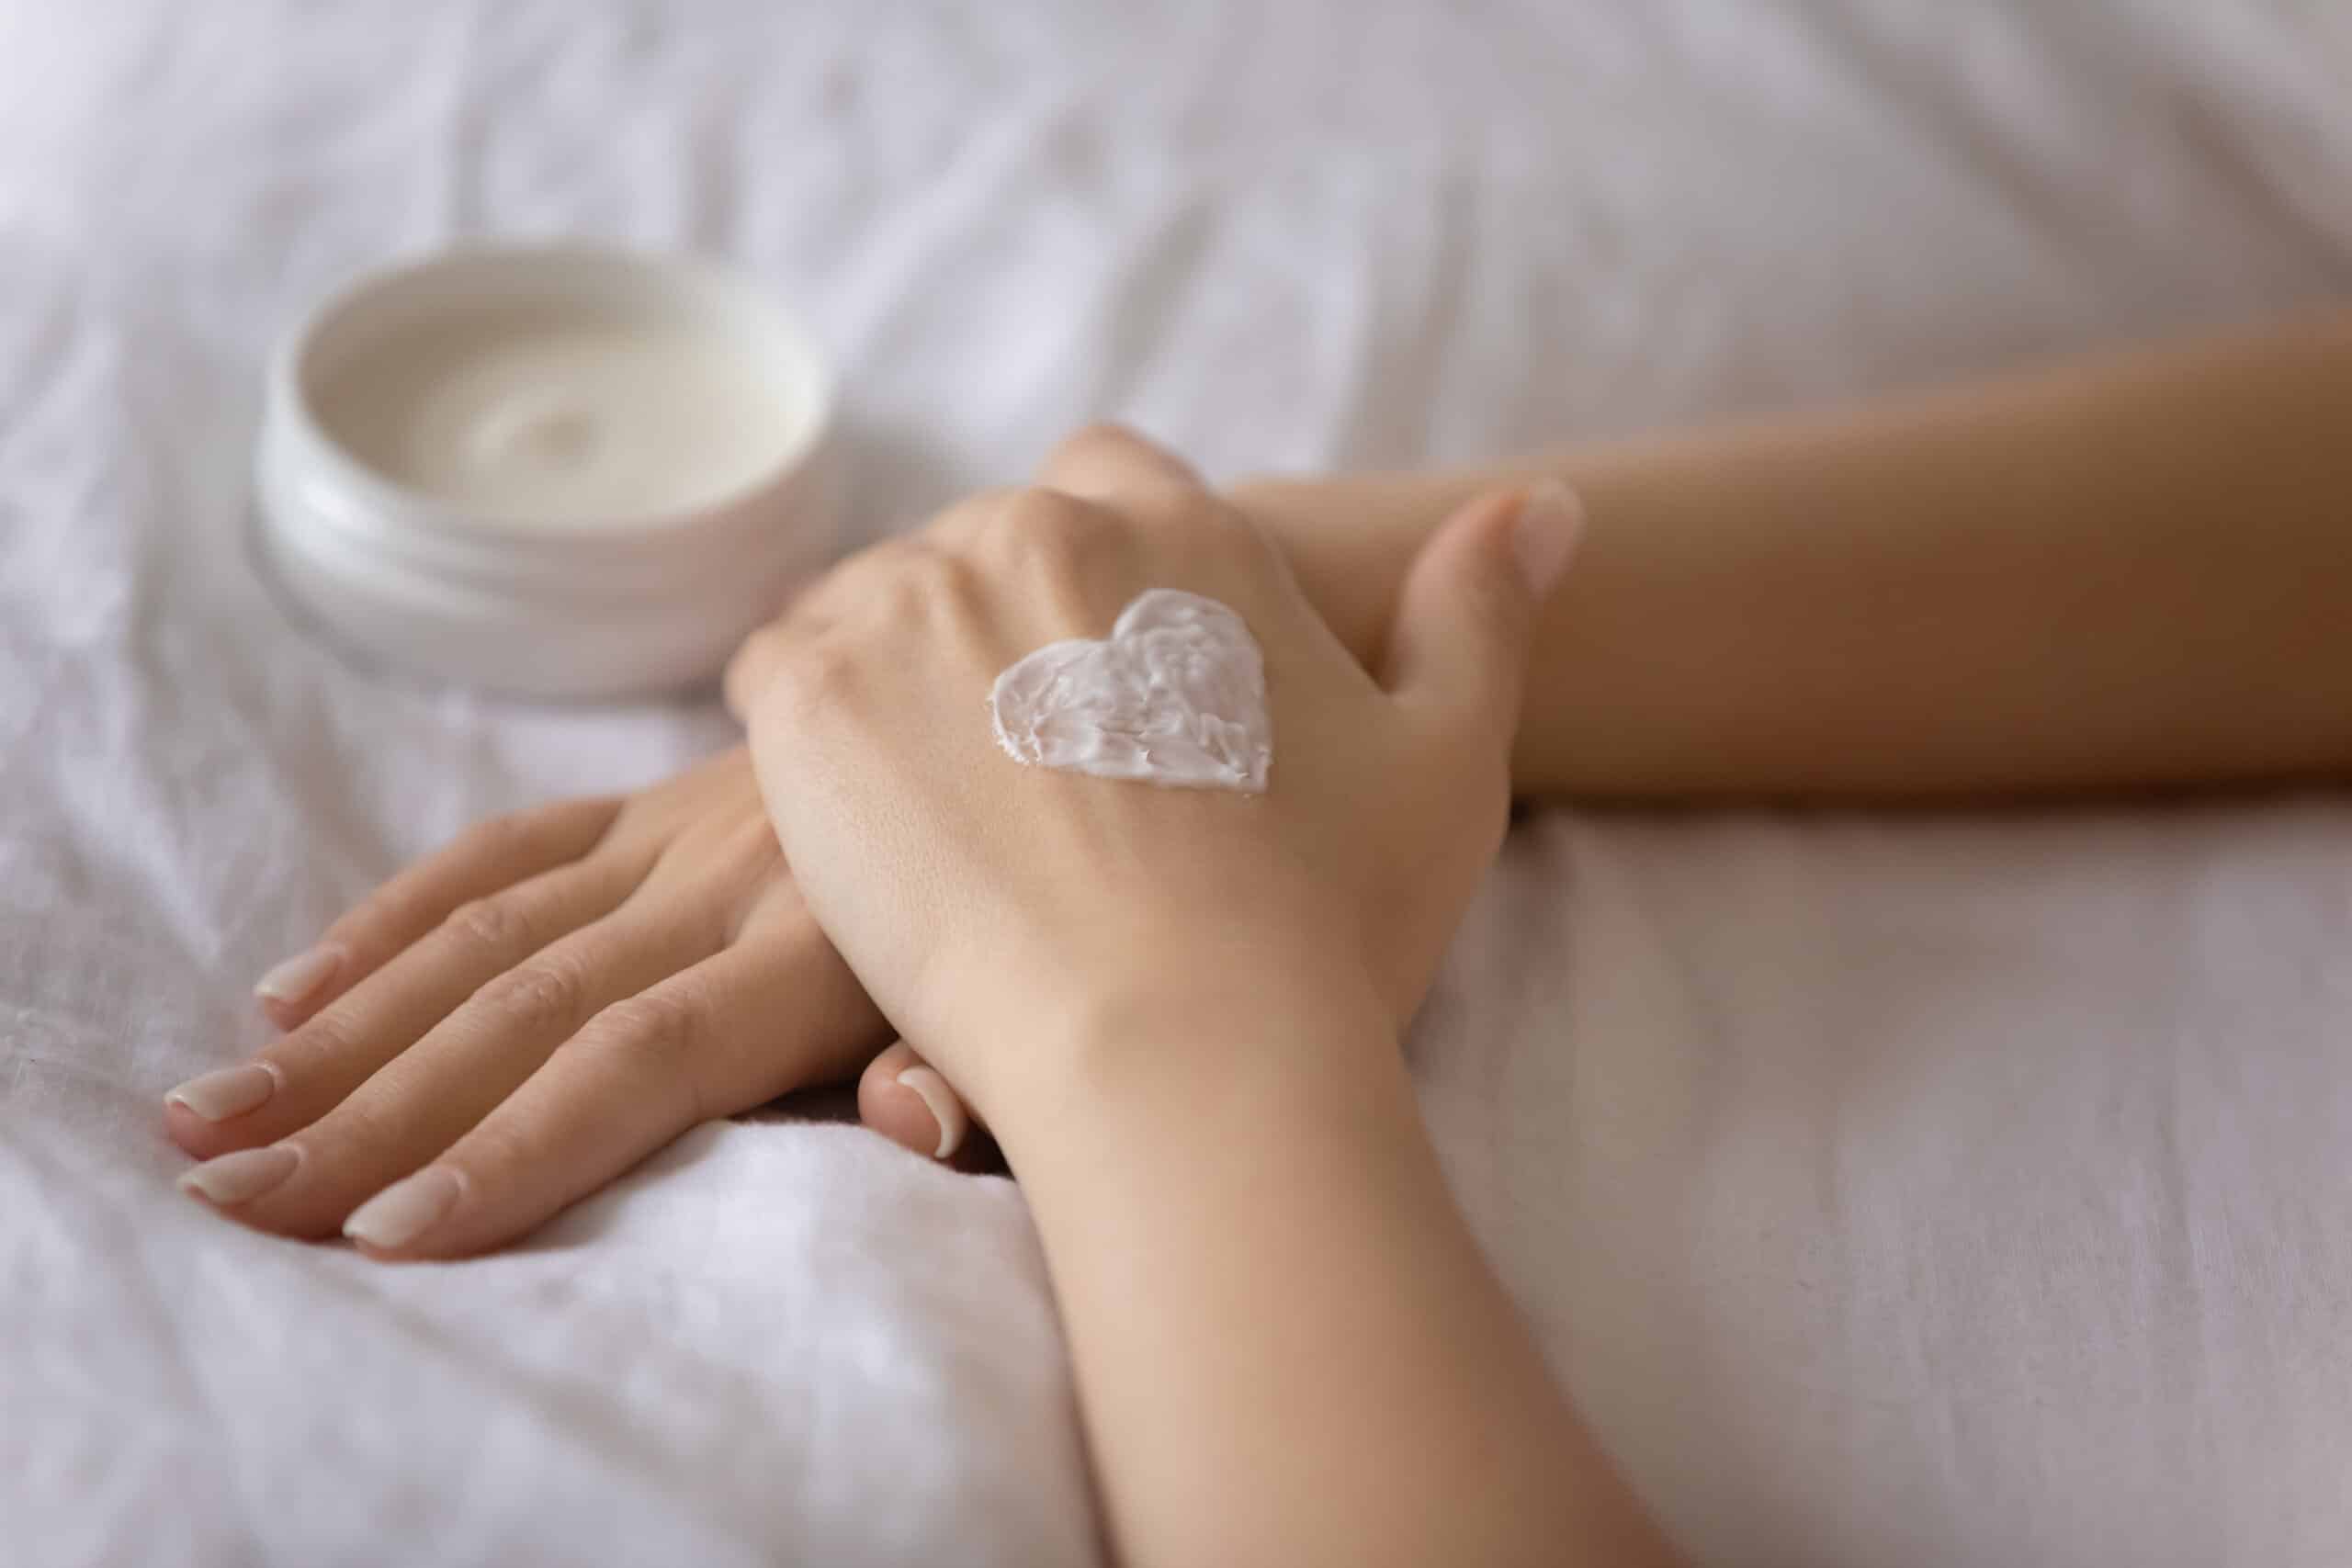 Hands with a heart of shea butter moisturizing